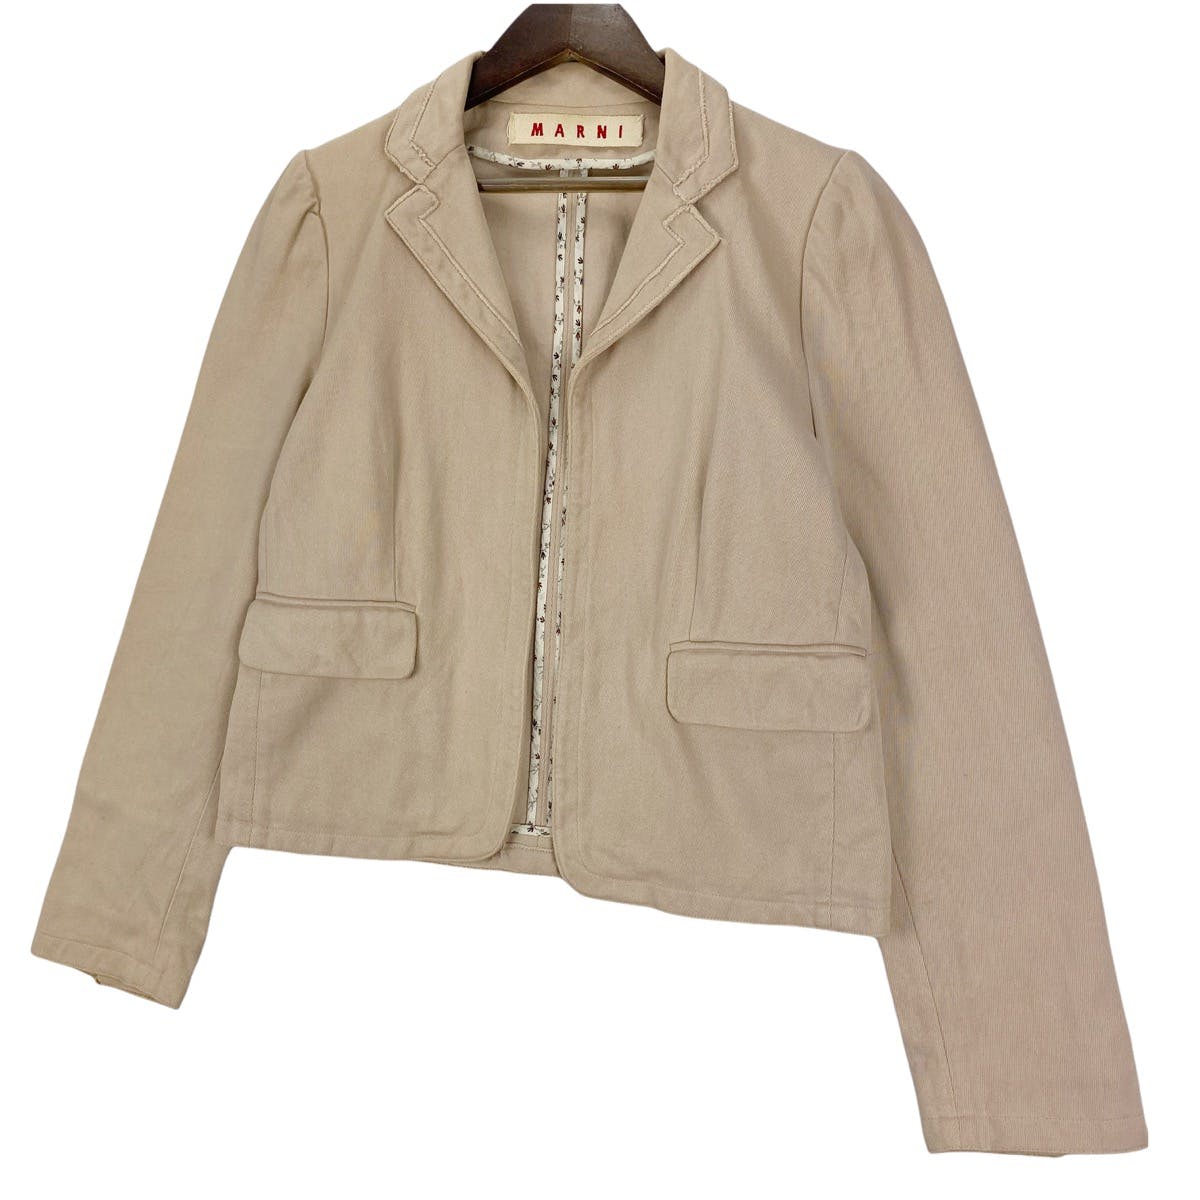 Marni Cropped Blazer Jacket Unbuttoned - 3